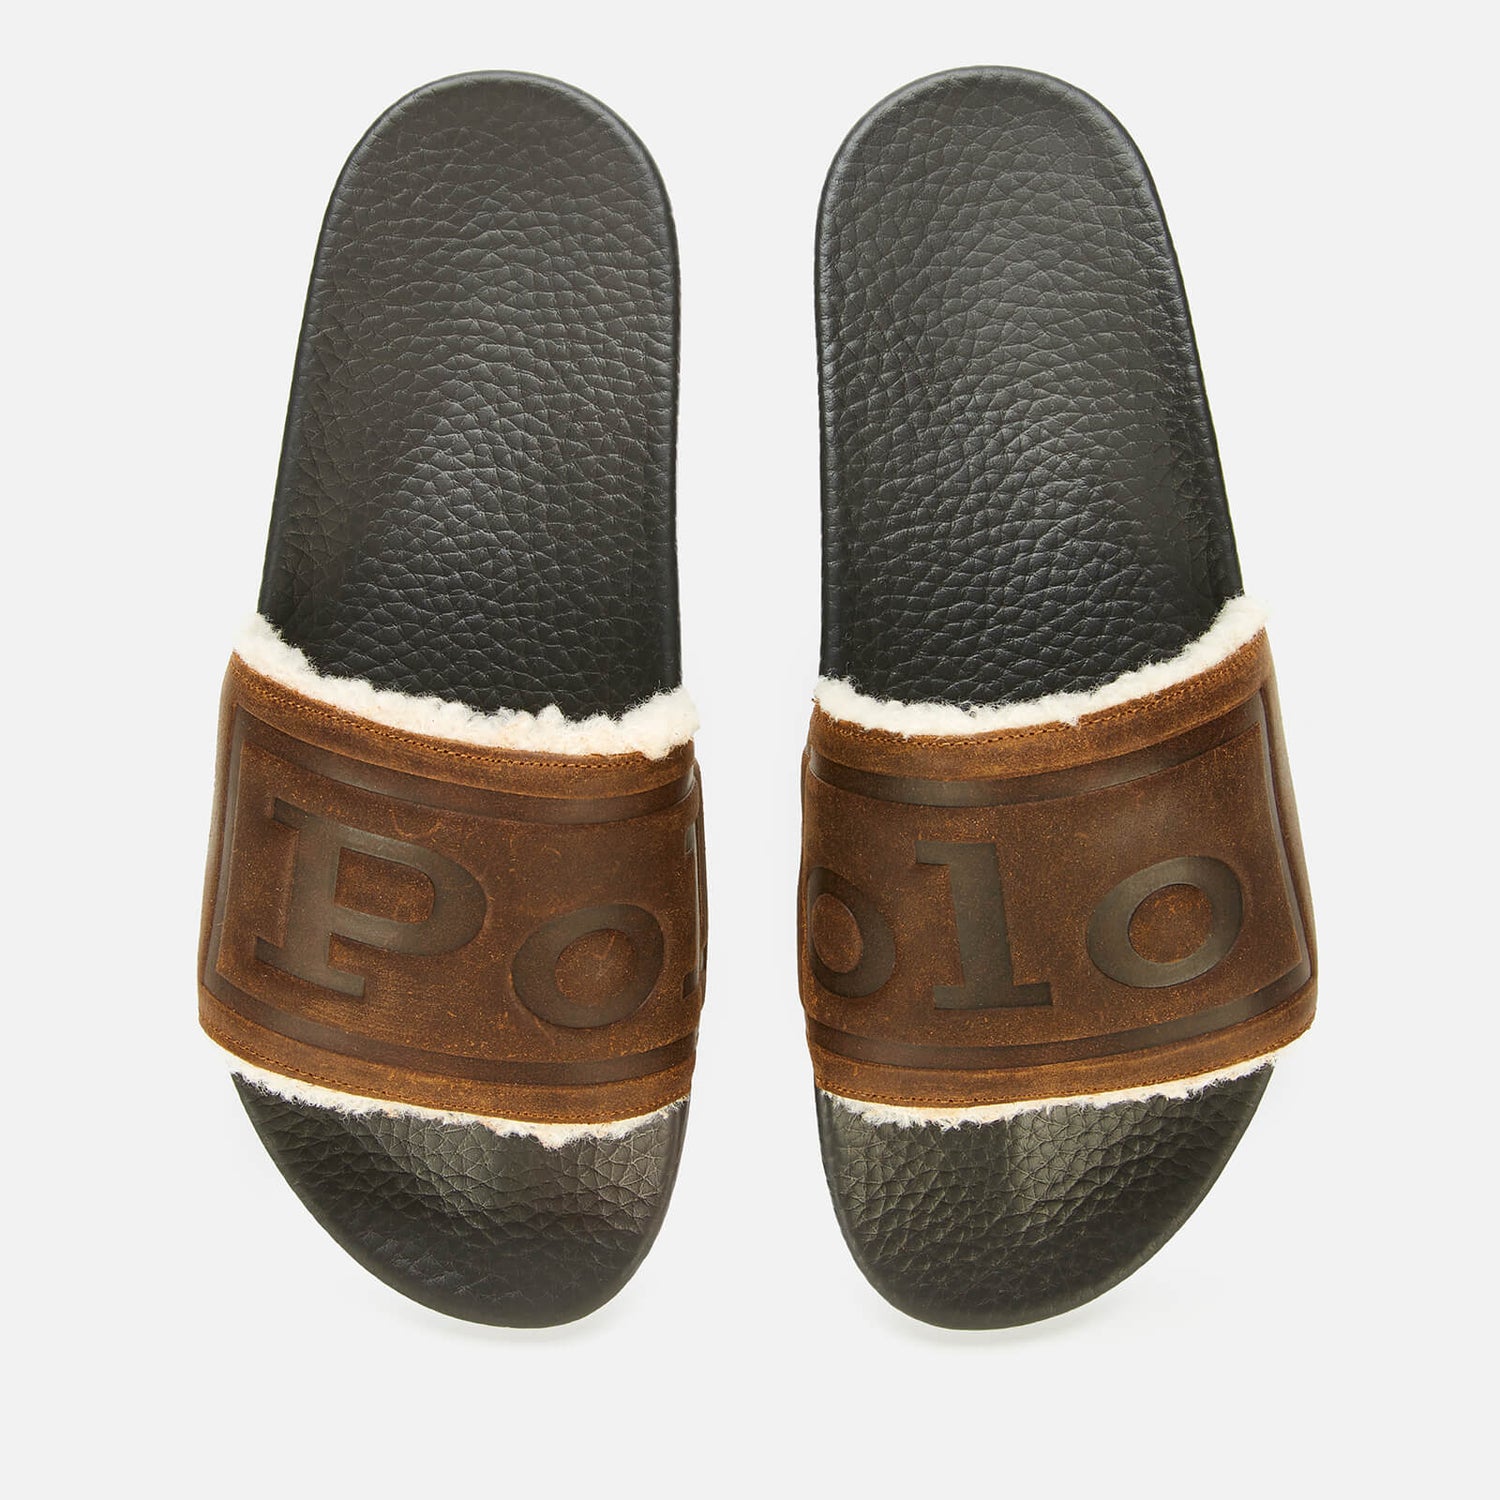 Polo Ralph Lauren Men's Slide Leather/Shearling Sandals - Snuff